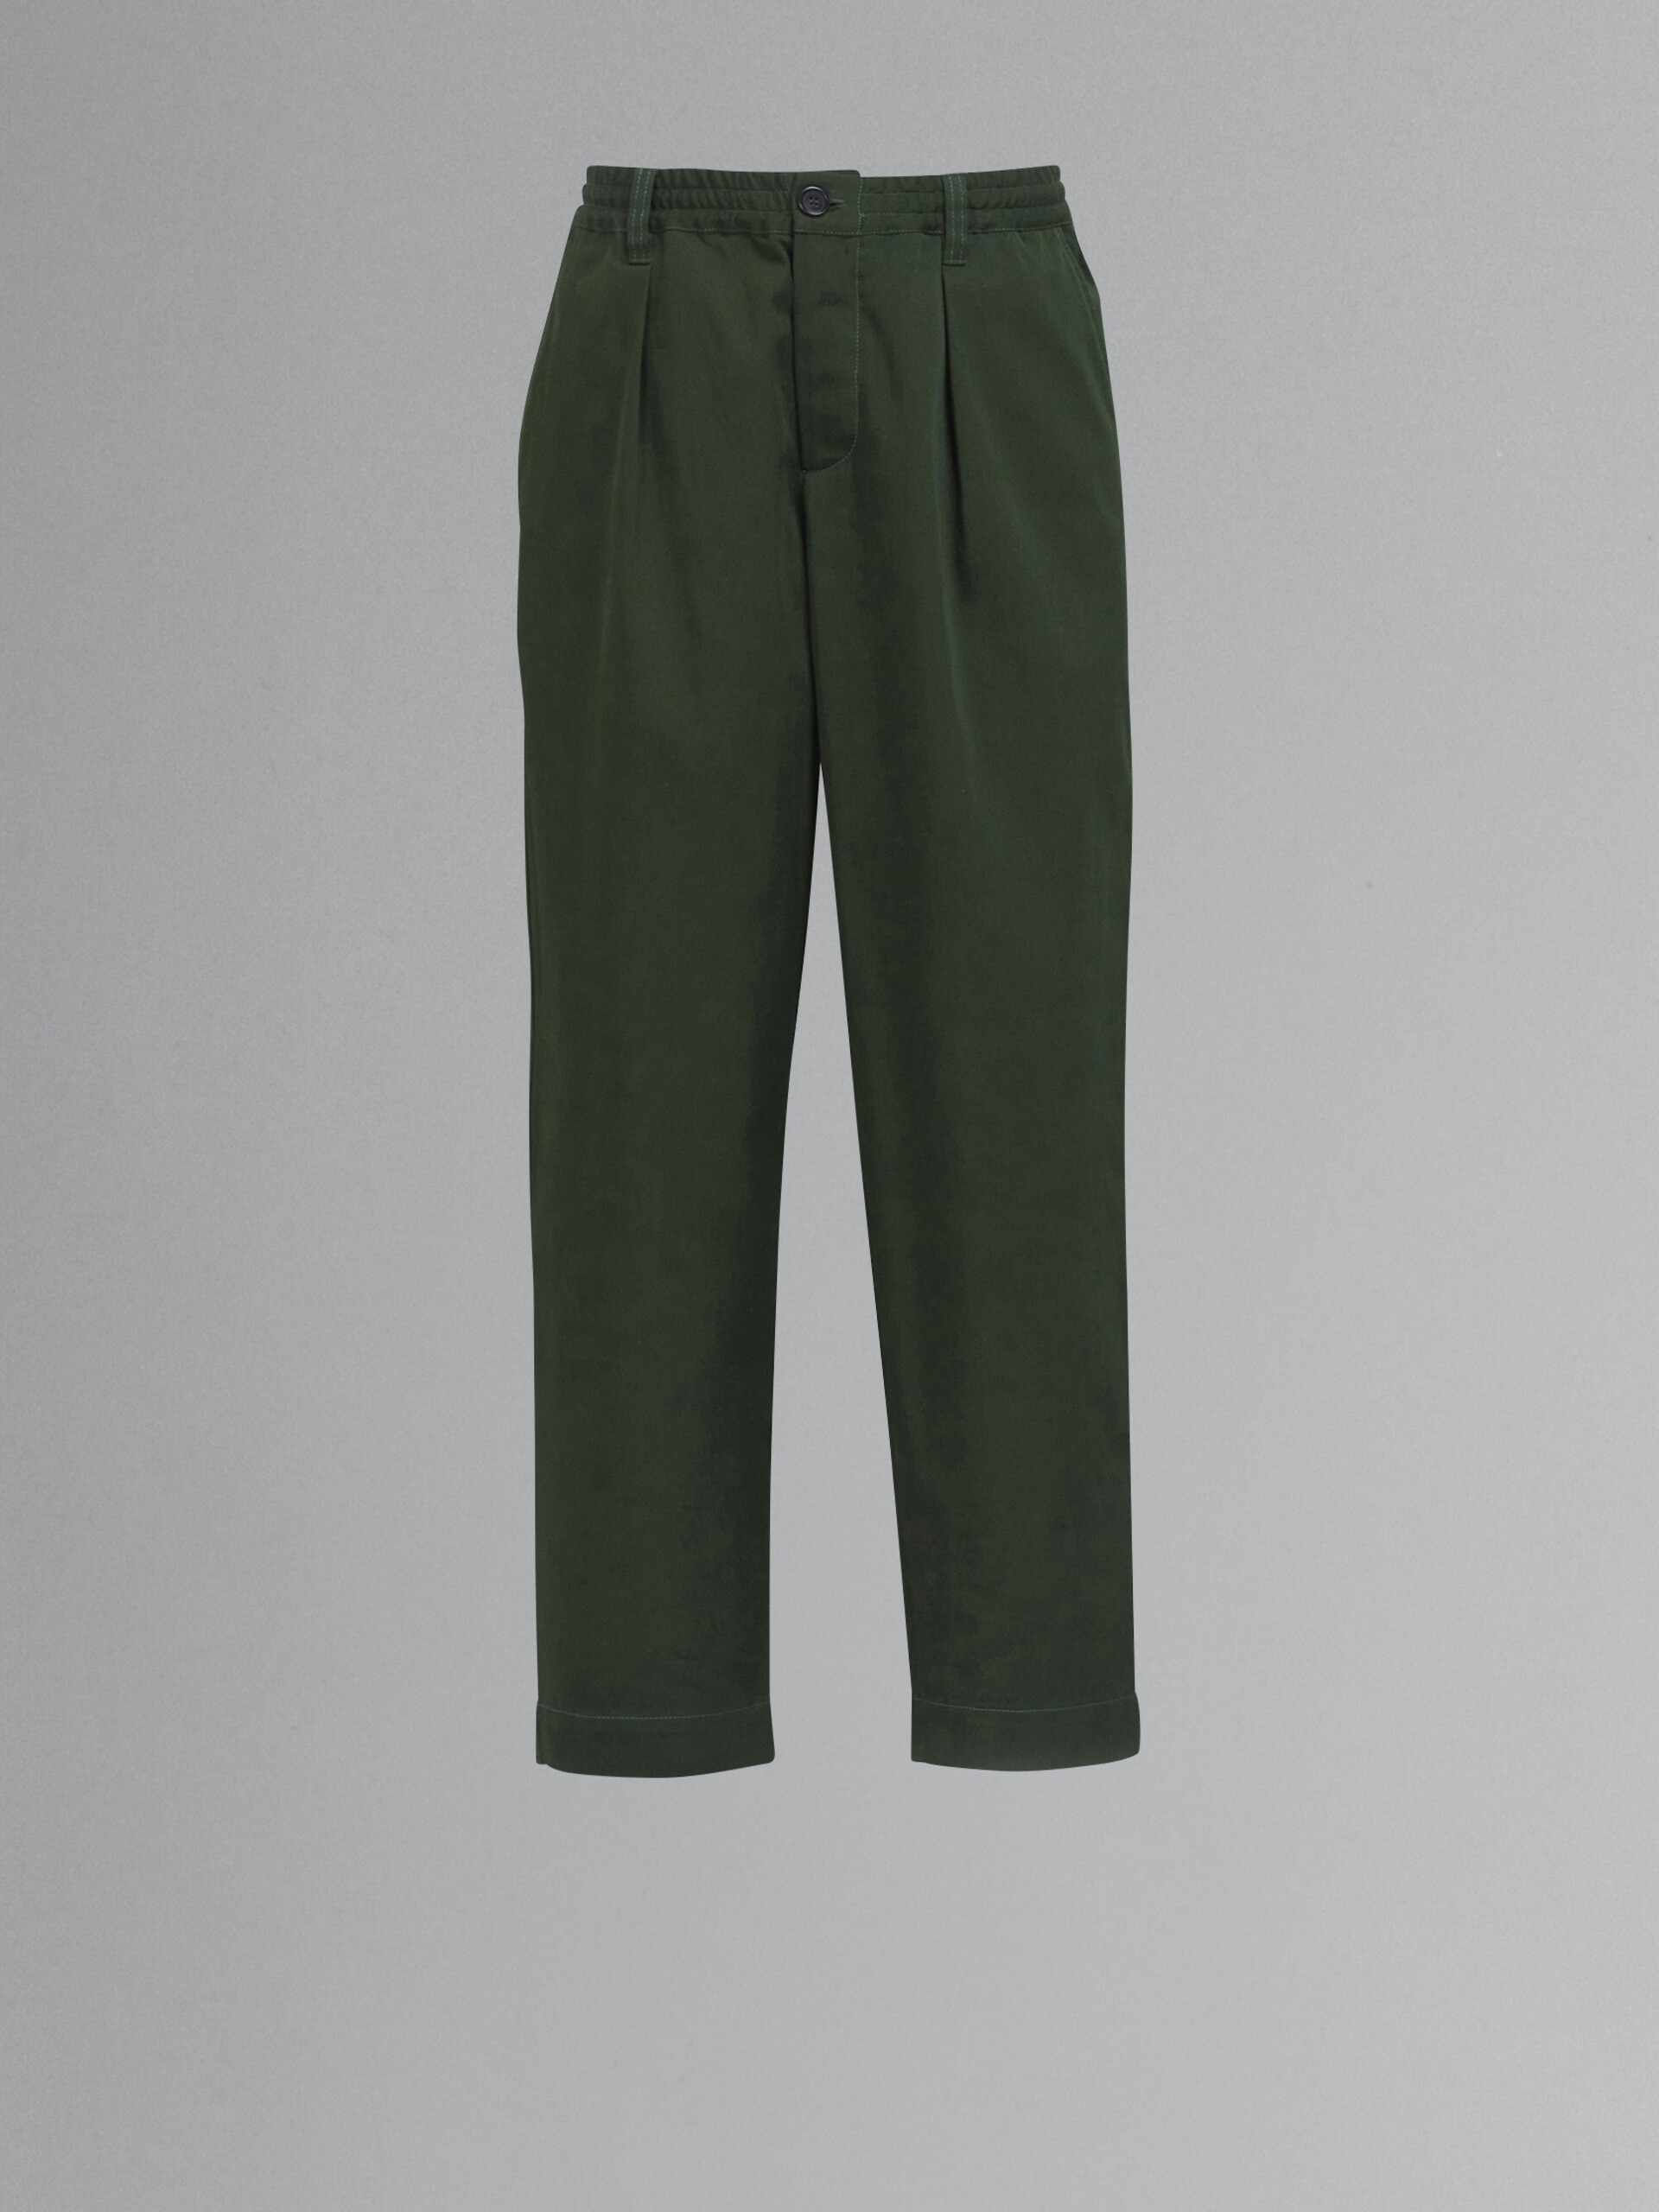 Cotton gabardine pants - Pants - Image 1